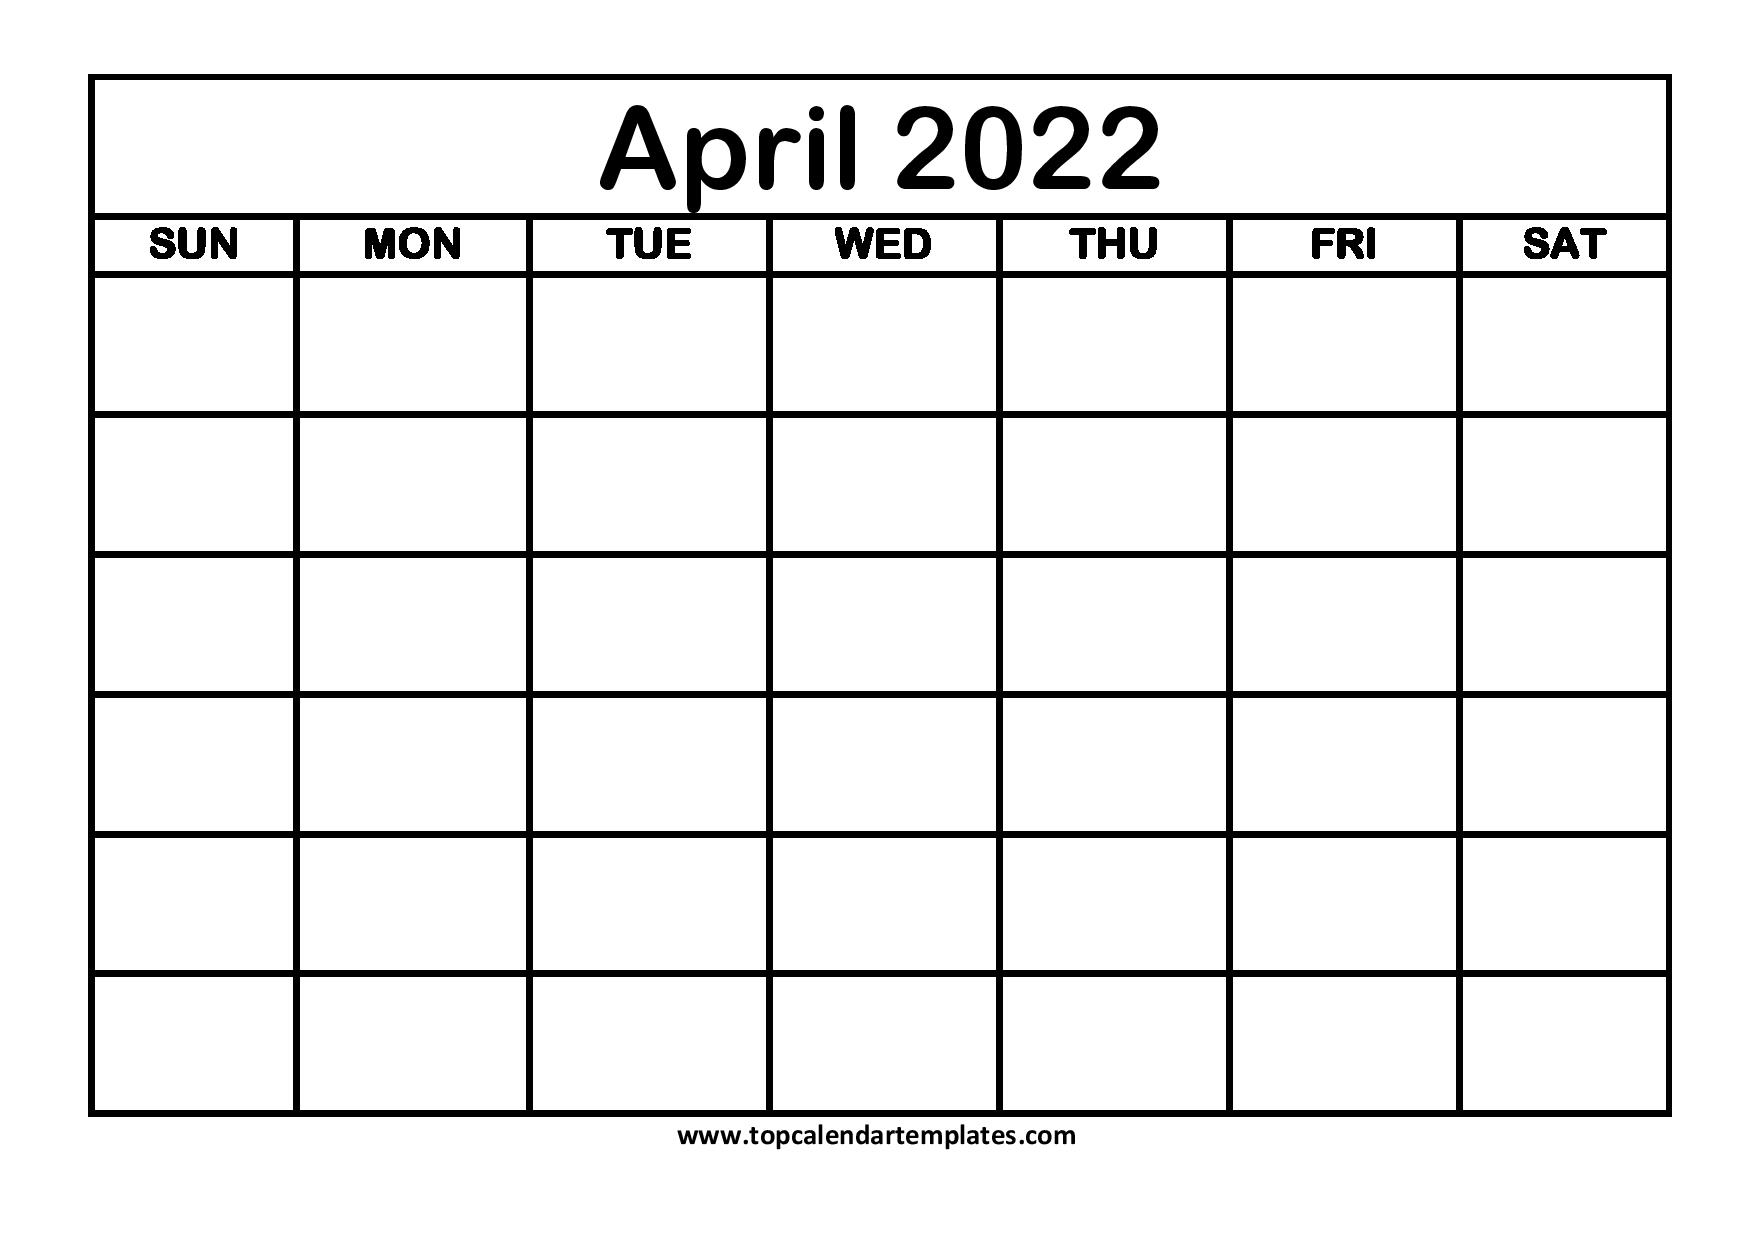 Printable Calendar April 2022 Templates - Pdf, Word, Excel